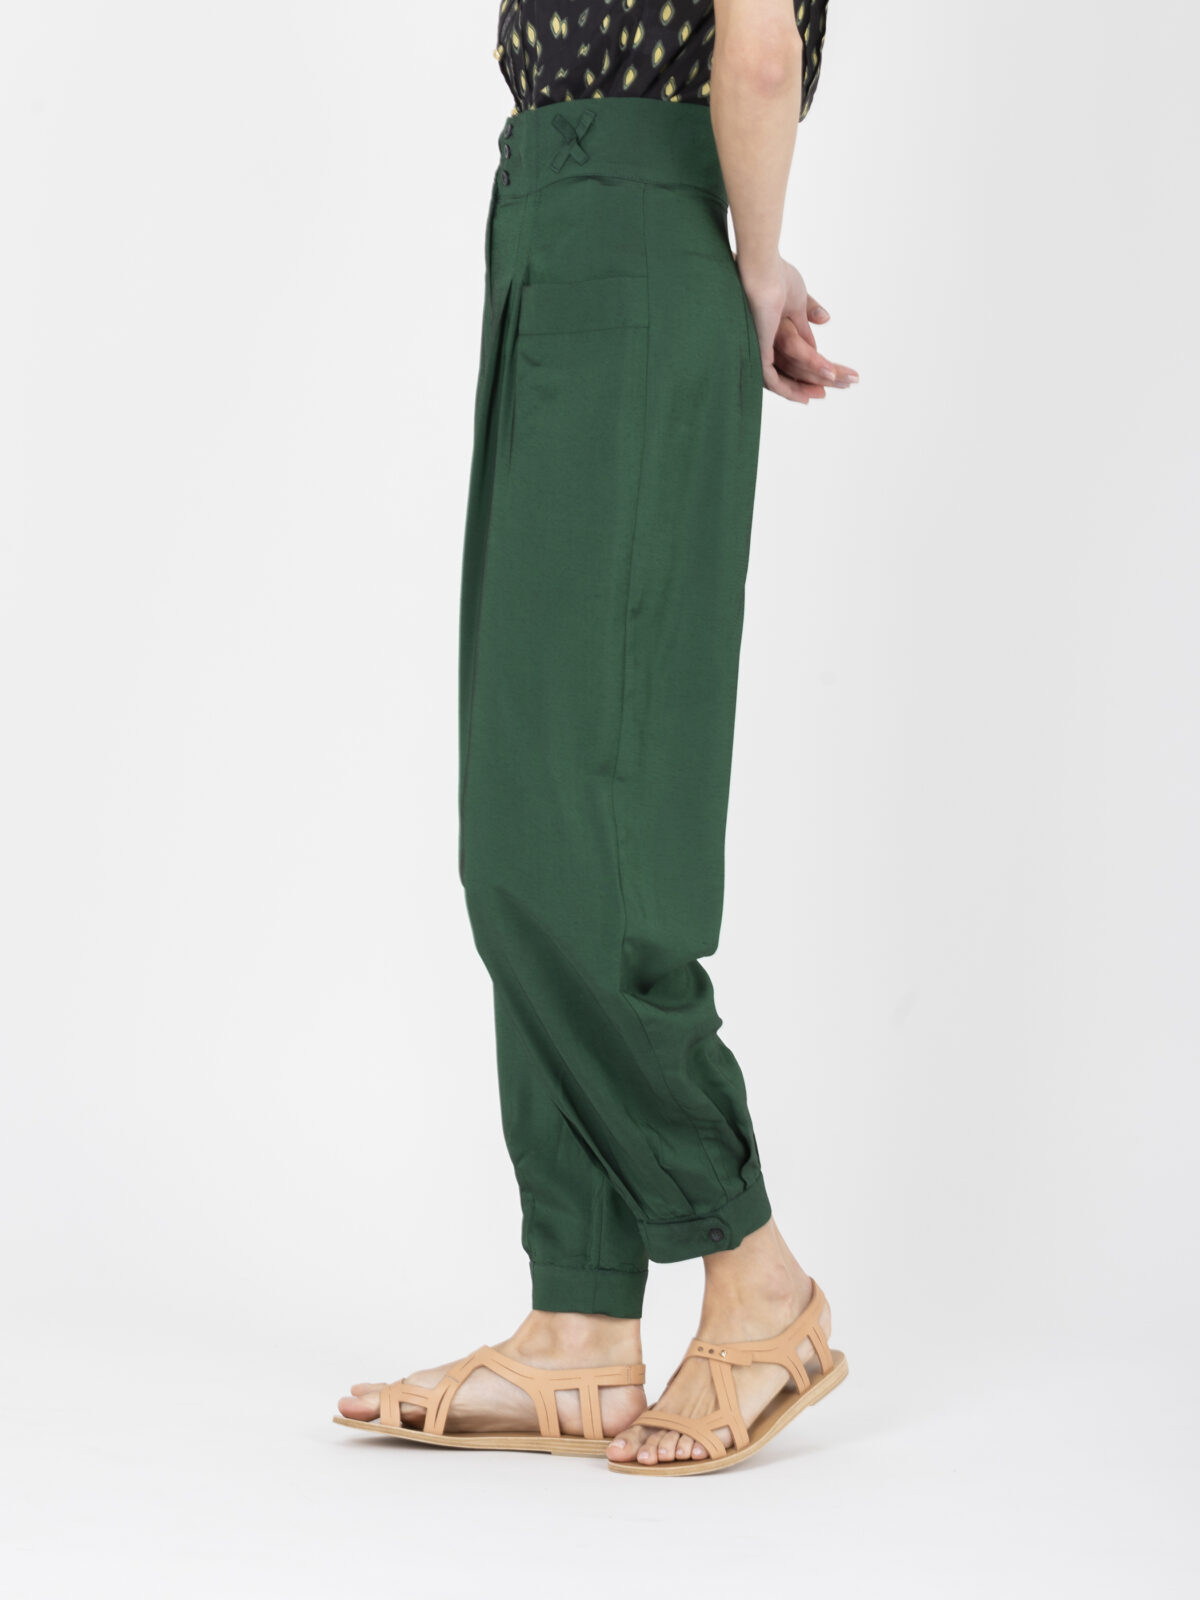 erica-dark-green-pants-high-waisted-balloon-uniforme-greek-designers-limited-editions-matchboxathens